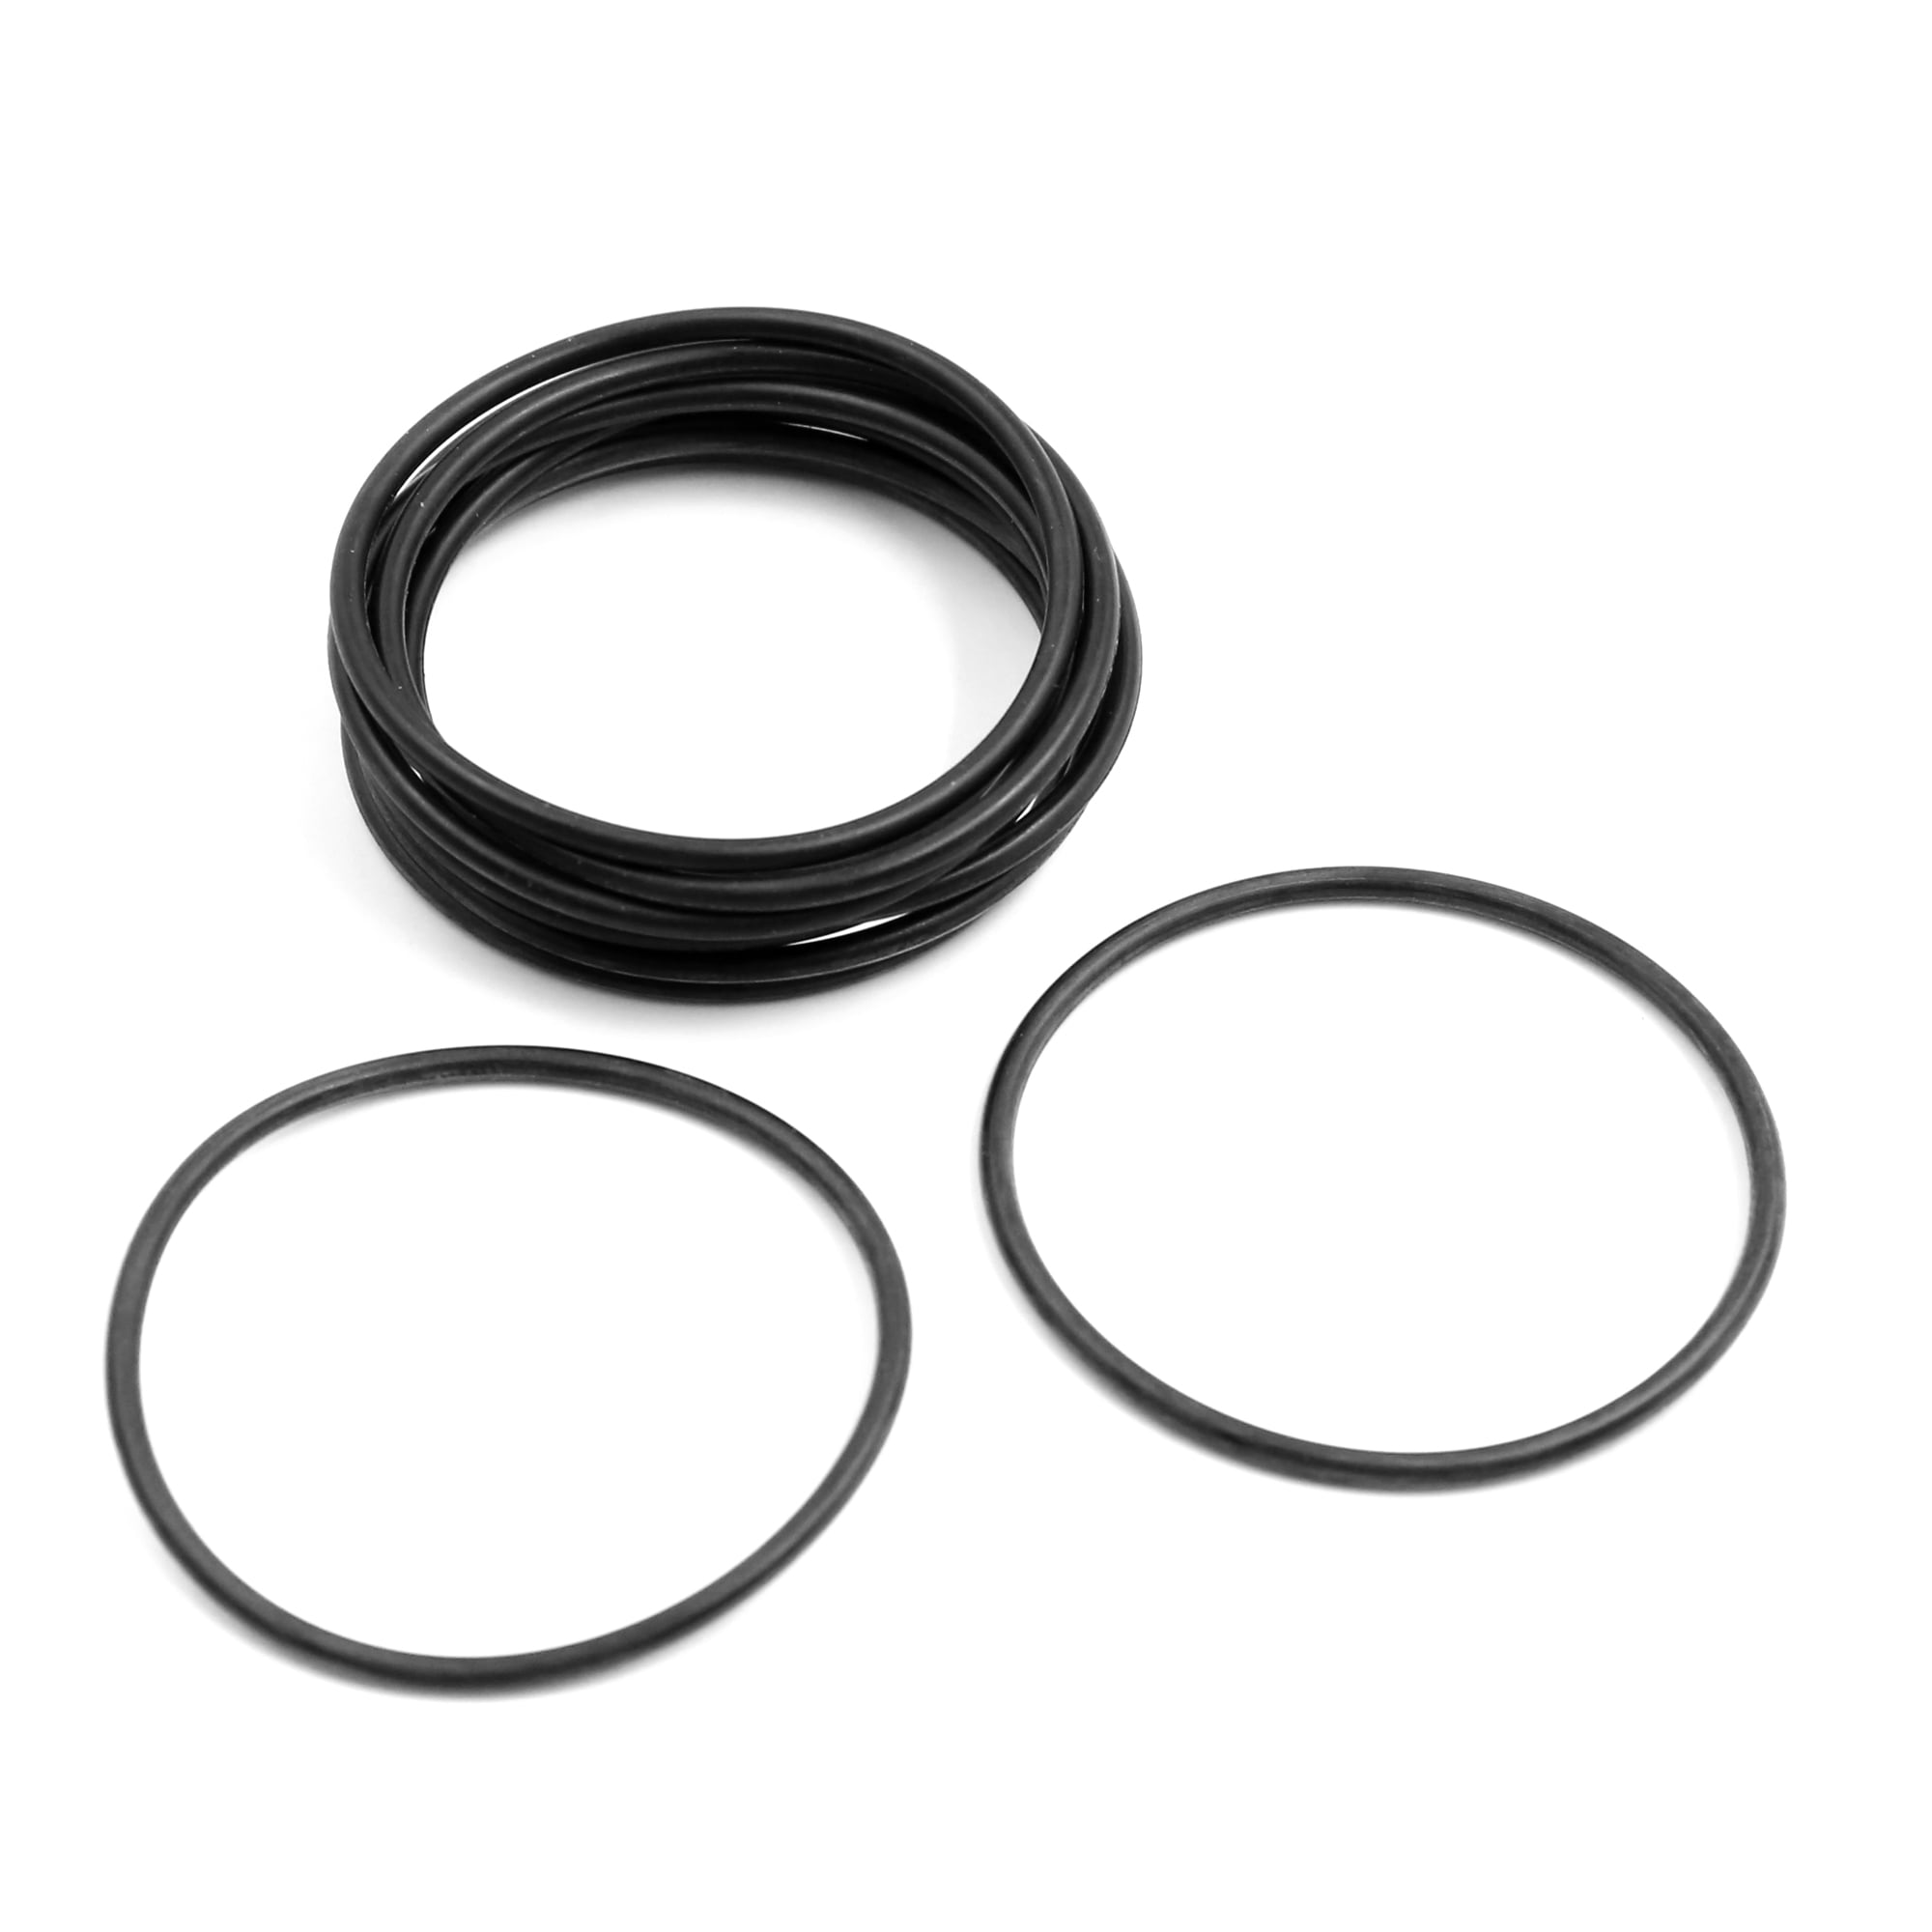 15pcs Black NBR70 O-Ring Washer Sealing Gasket for Automotive Car 15 x 2.5mm 